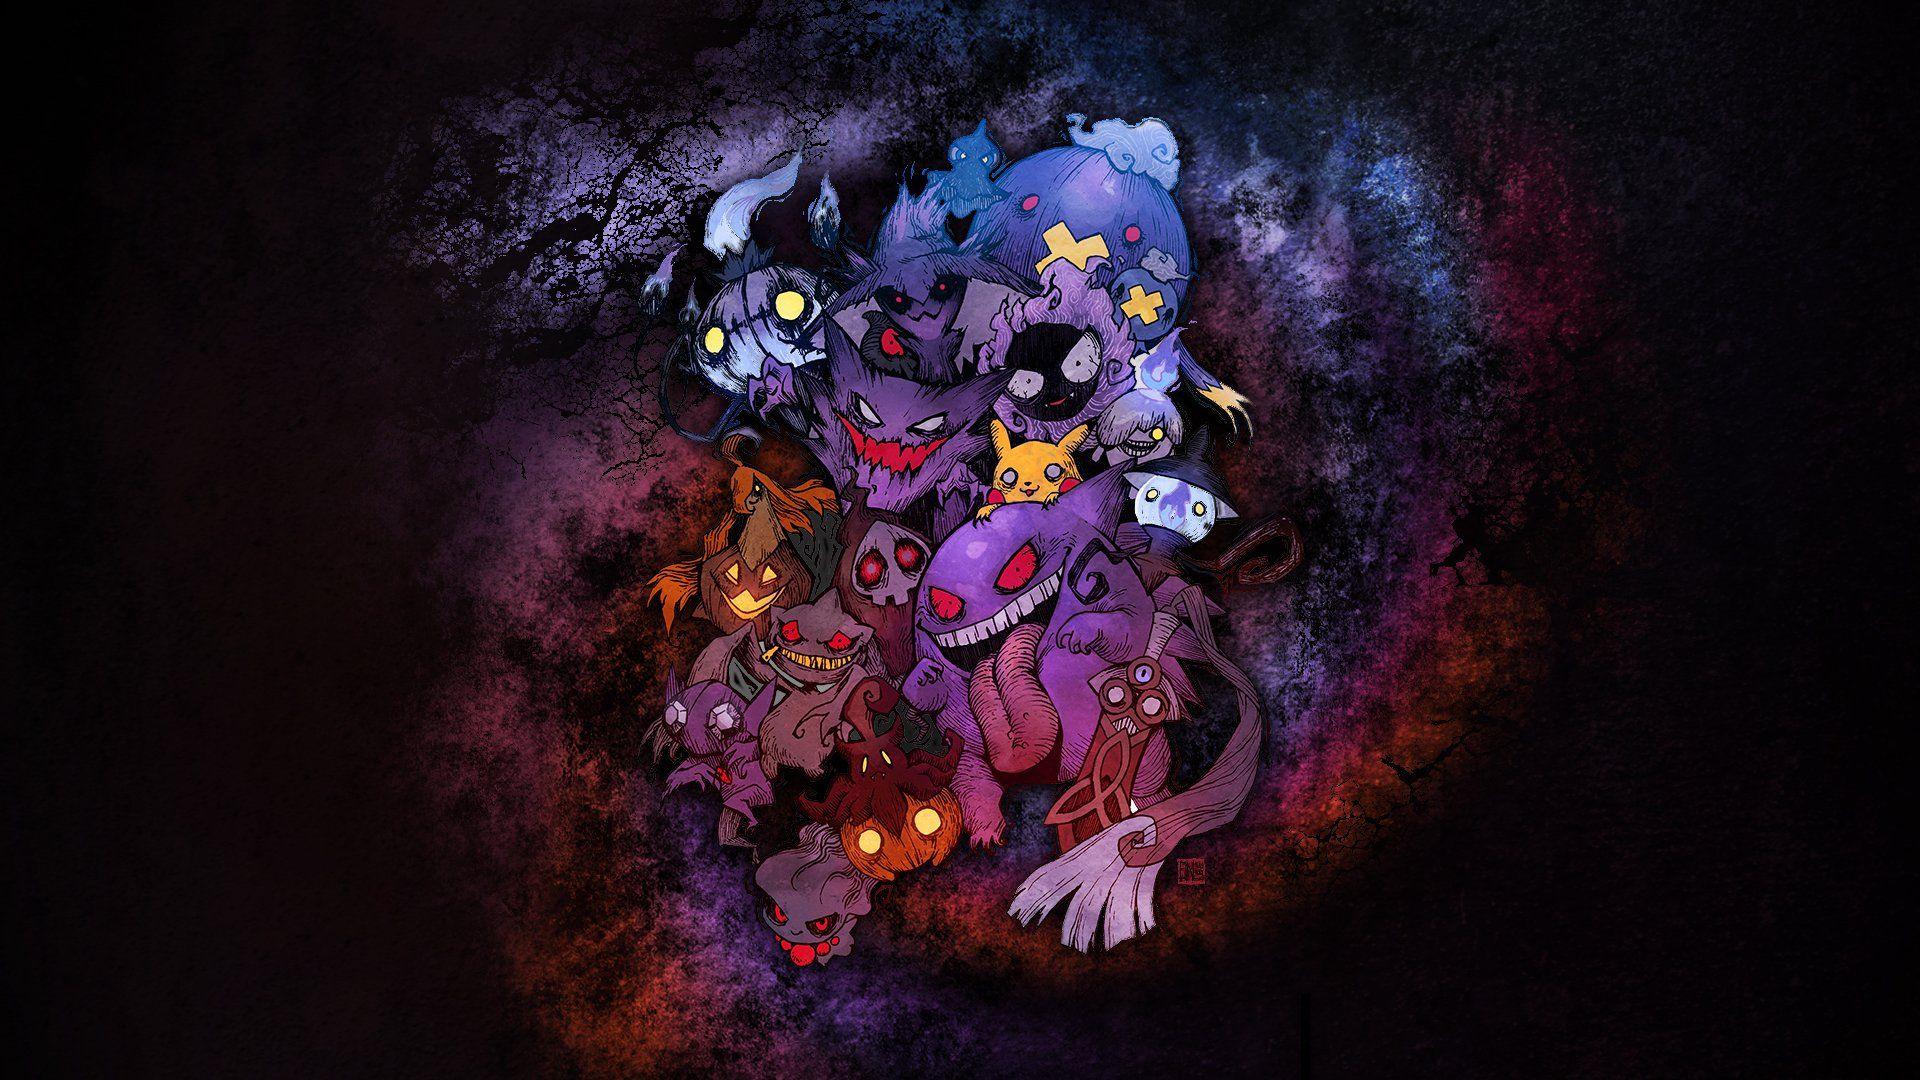 Gengar (Pokémon) HD Wallpaper and Background Image